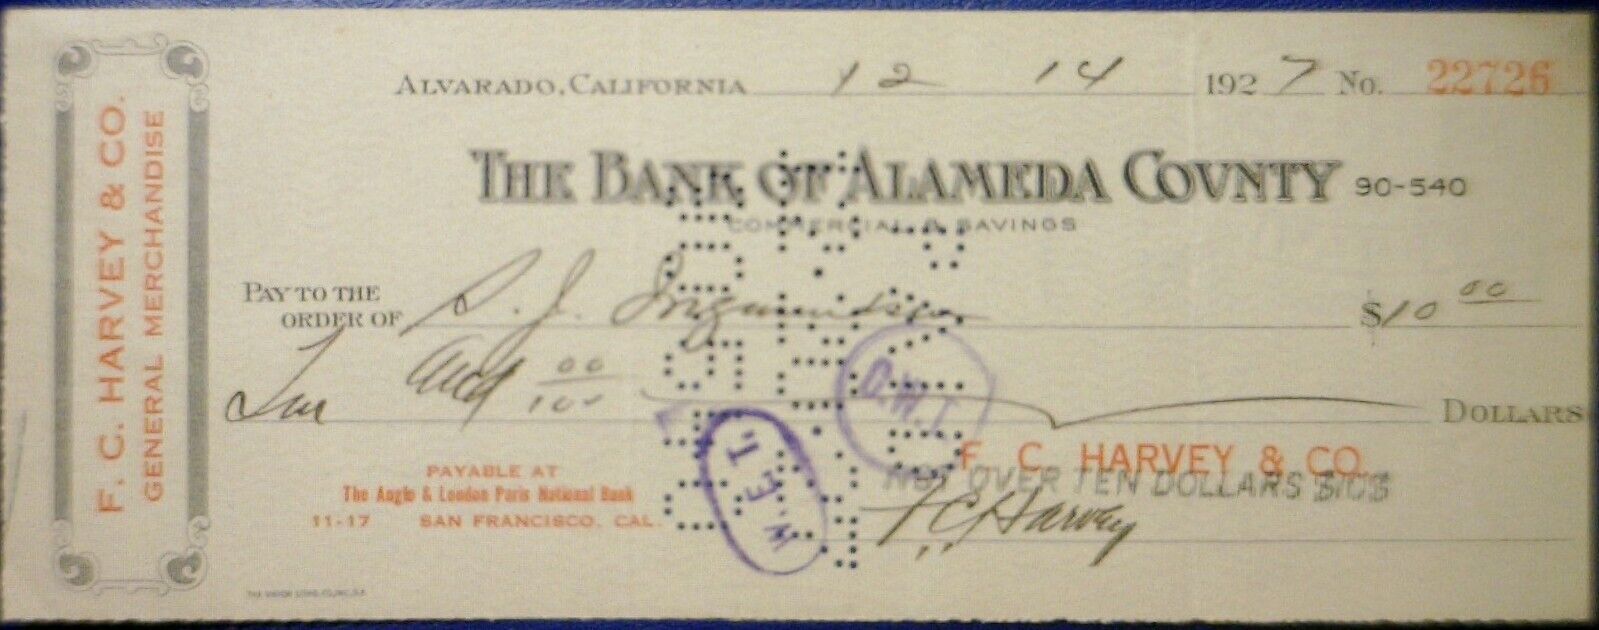 1927 The Bank of ALAMEDA County ALVARADO CALIFORNIA Check LOT #37  